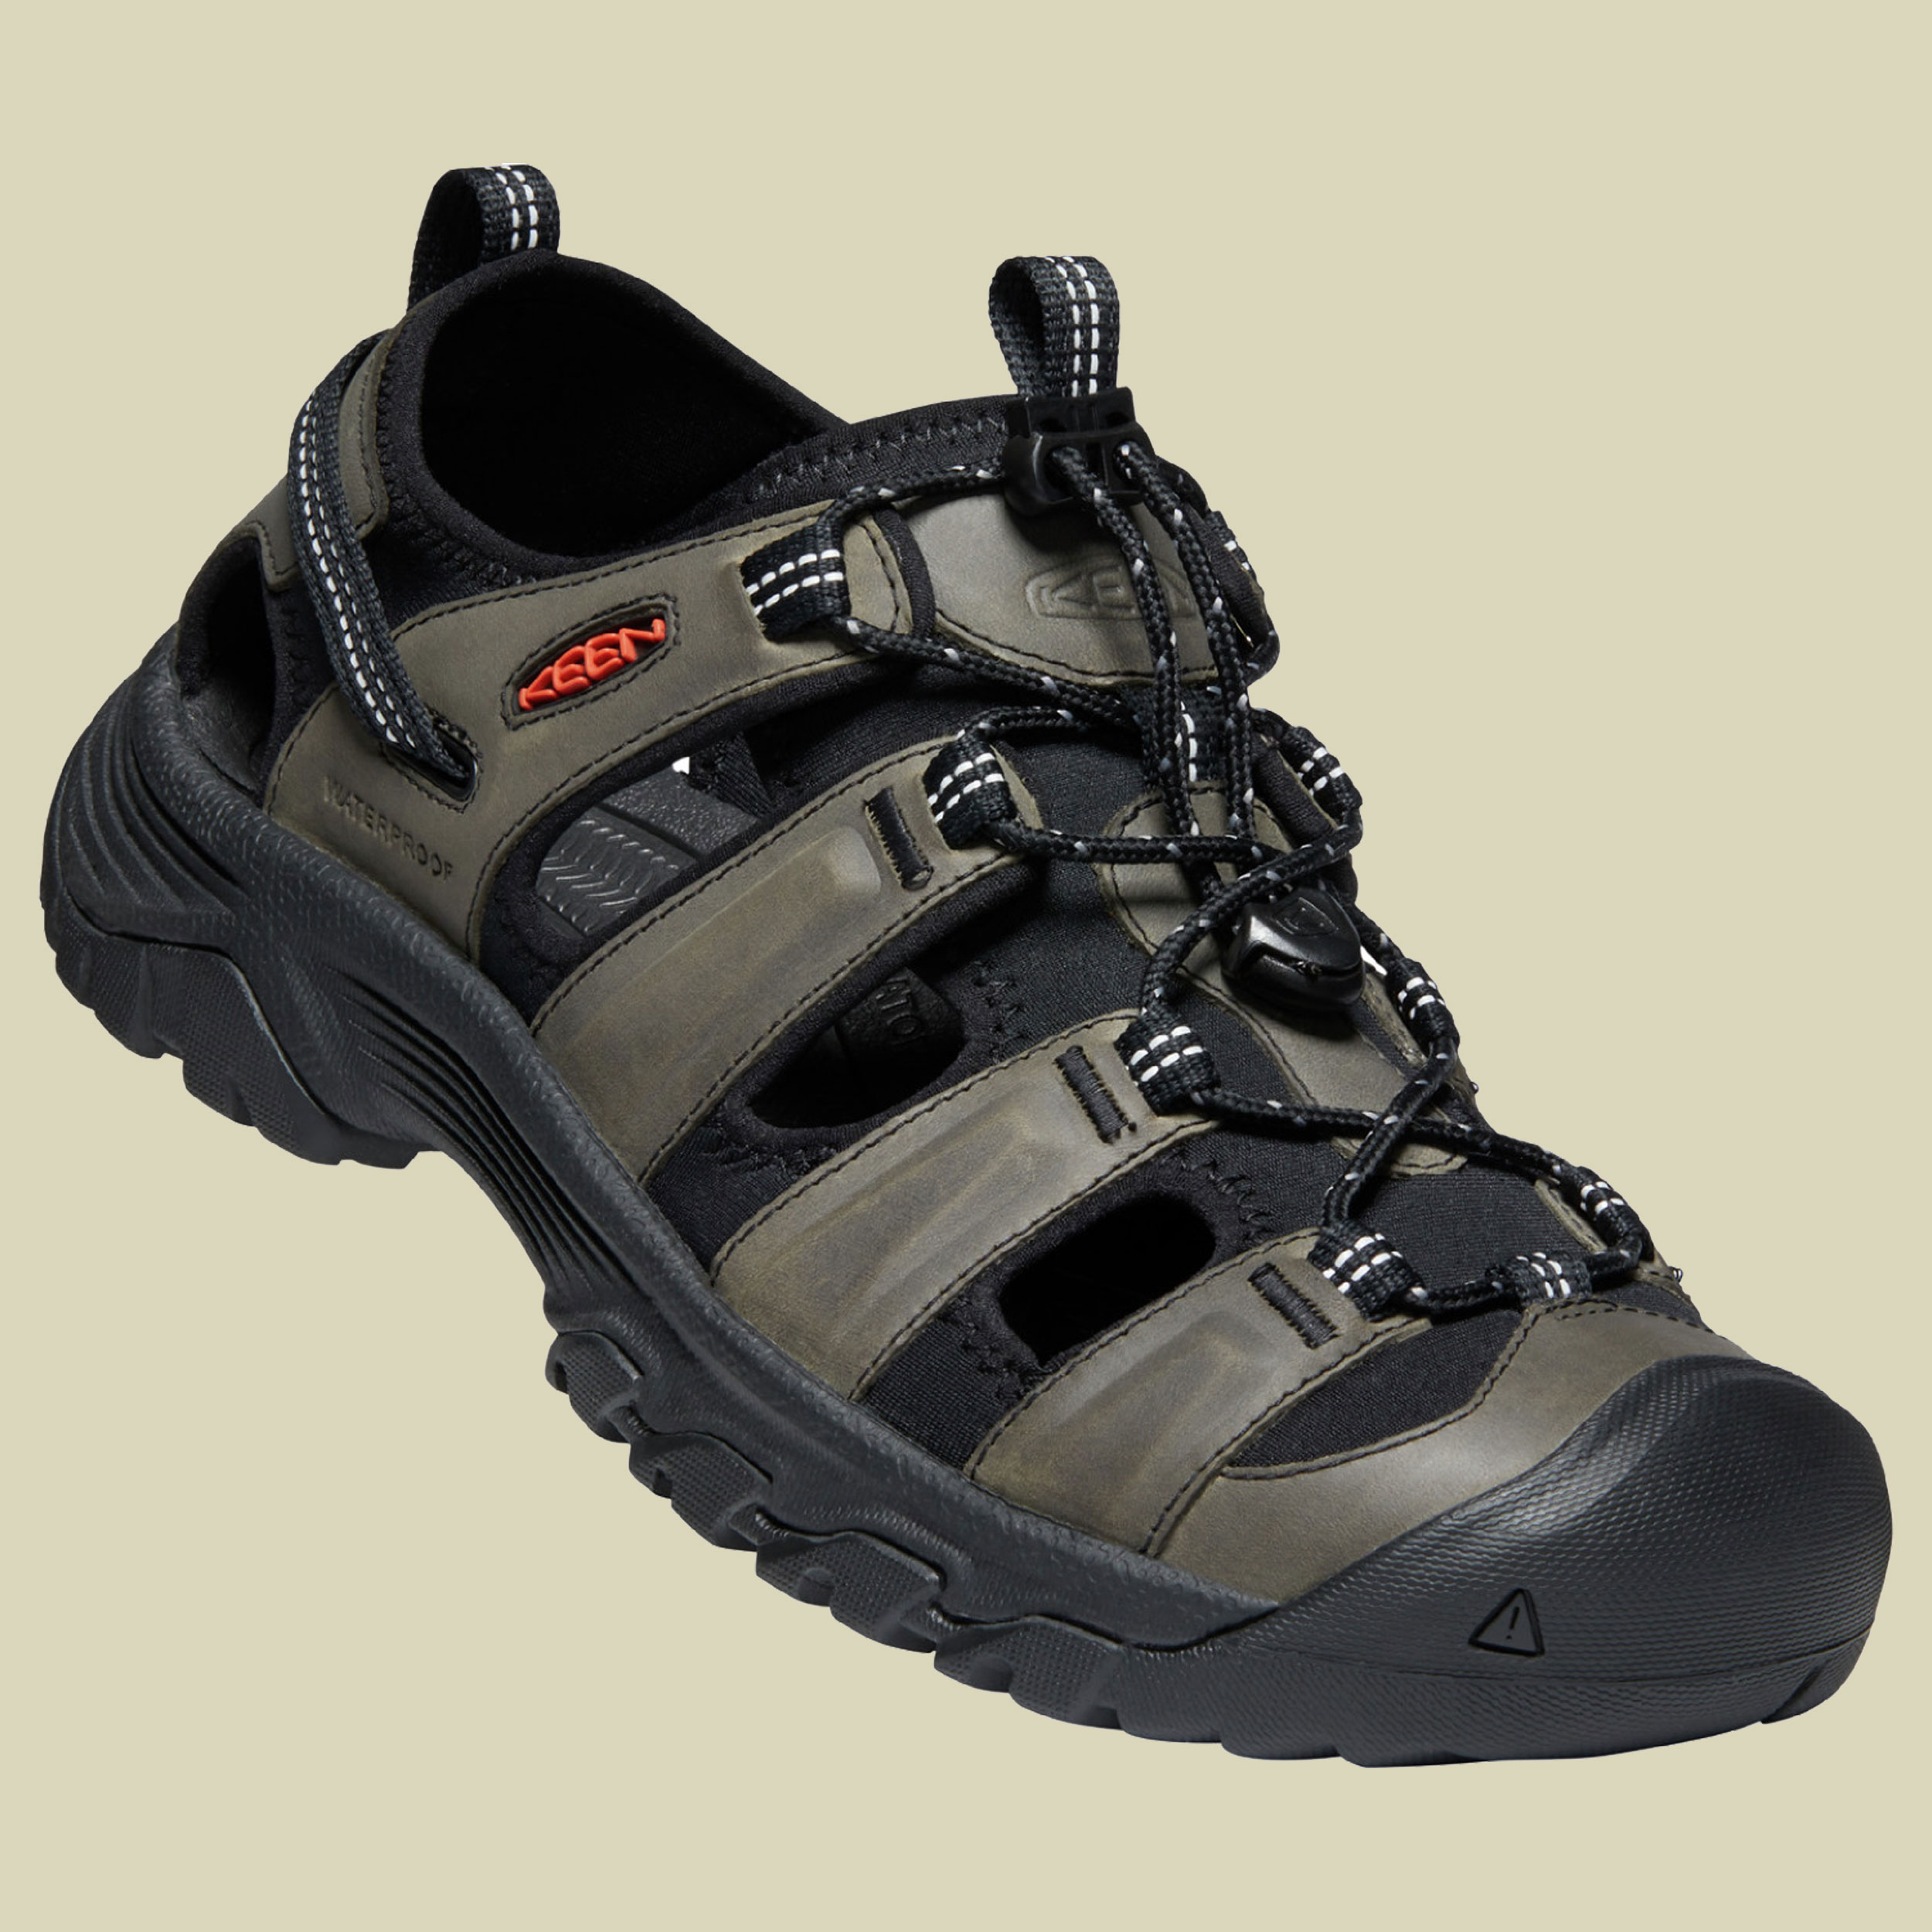 Targhee III Sandal Men Größe UK 8,5 Farbe grey/black